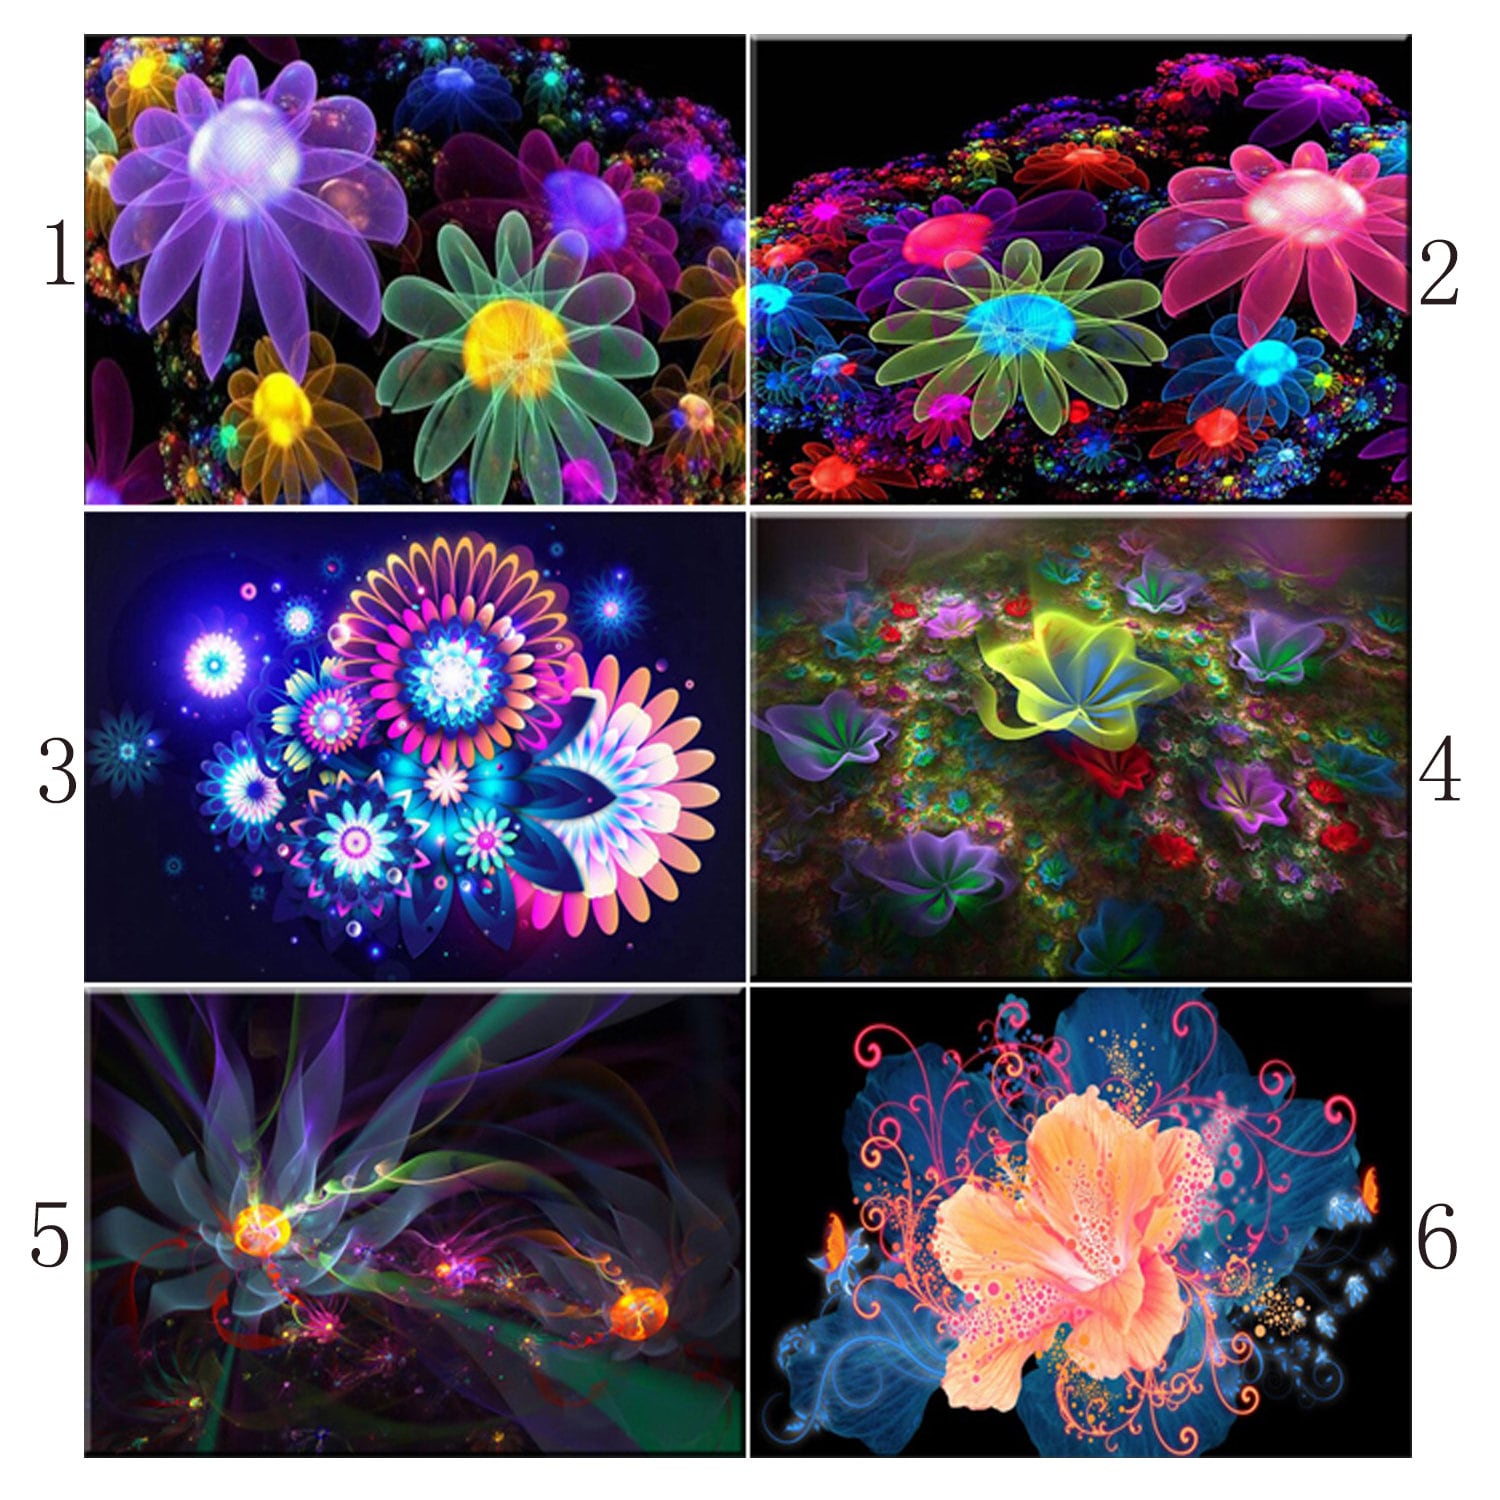 DIY Glow in the Dark Diamond Painting 5D Night Luminous Diamond Embroidery  Art Crafts for Home Room Decor 30x40cm